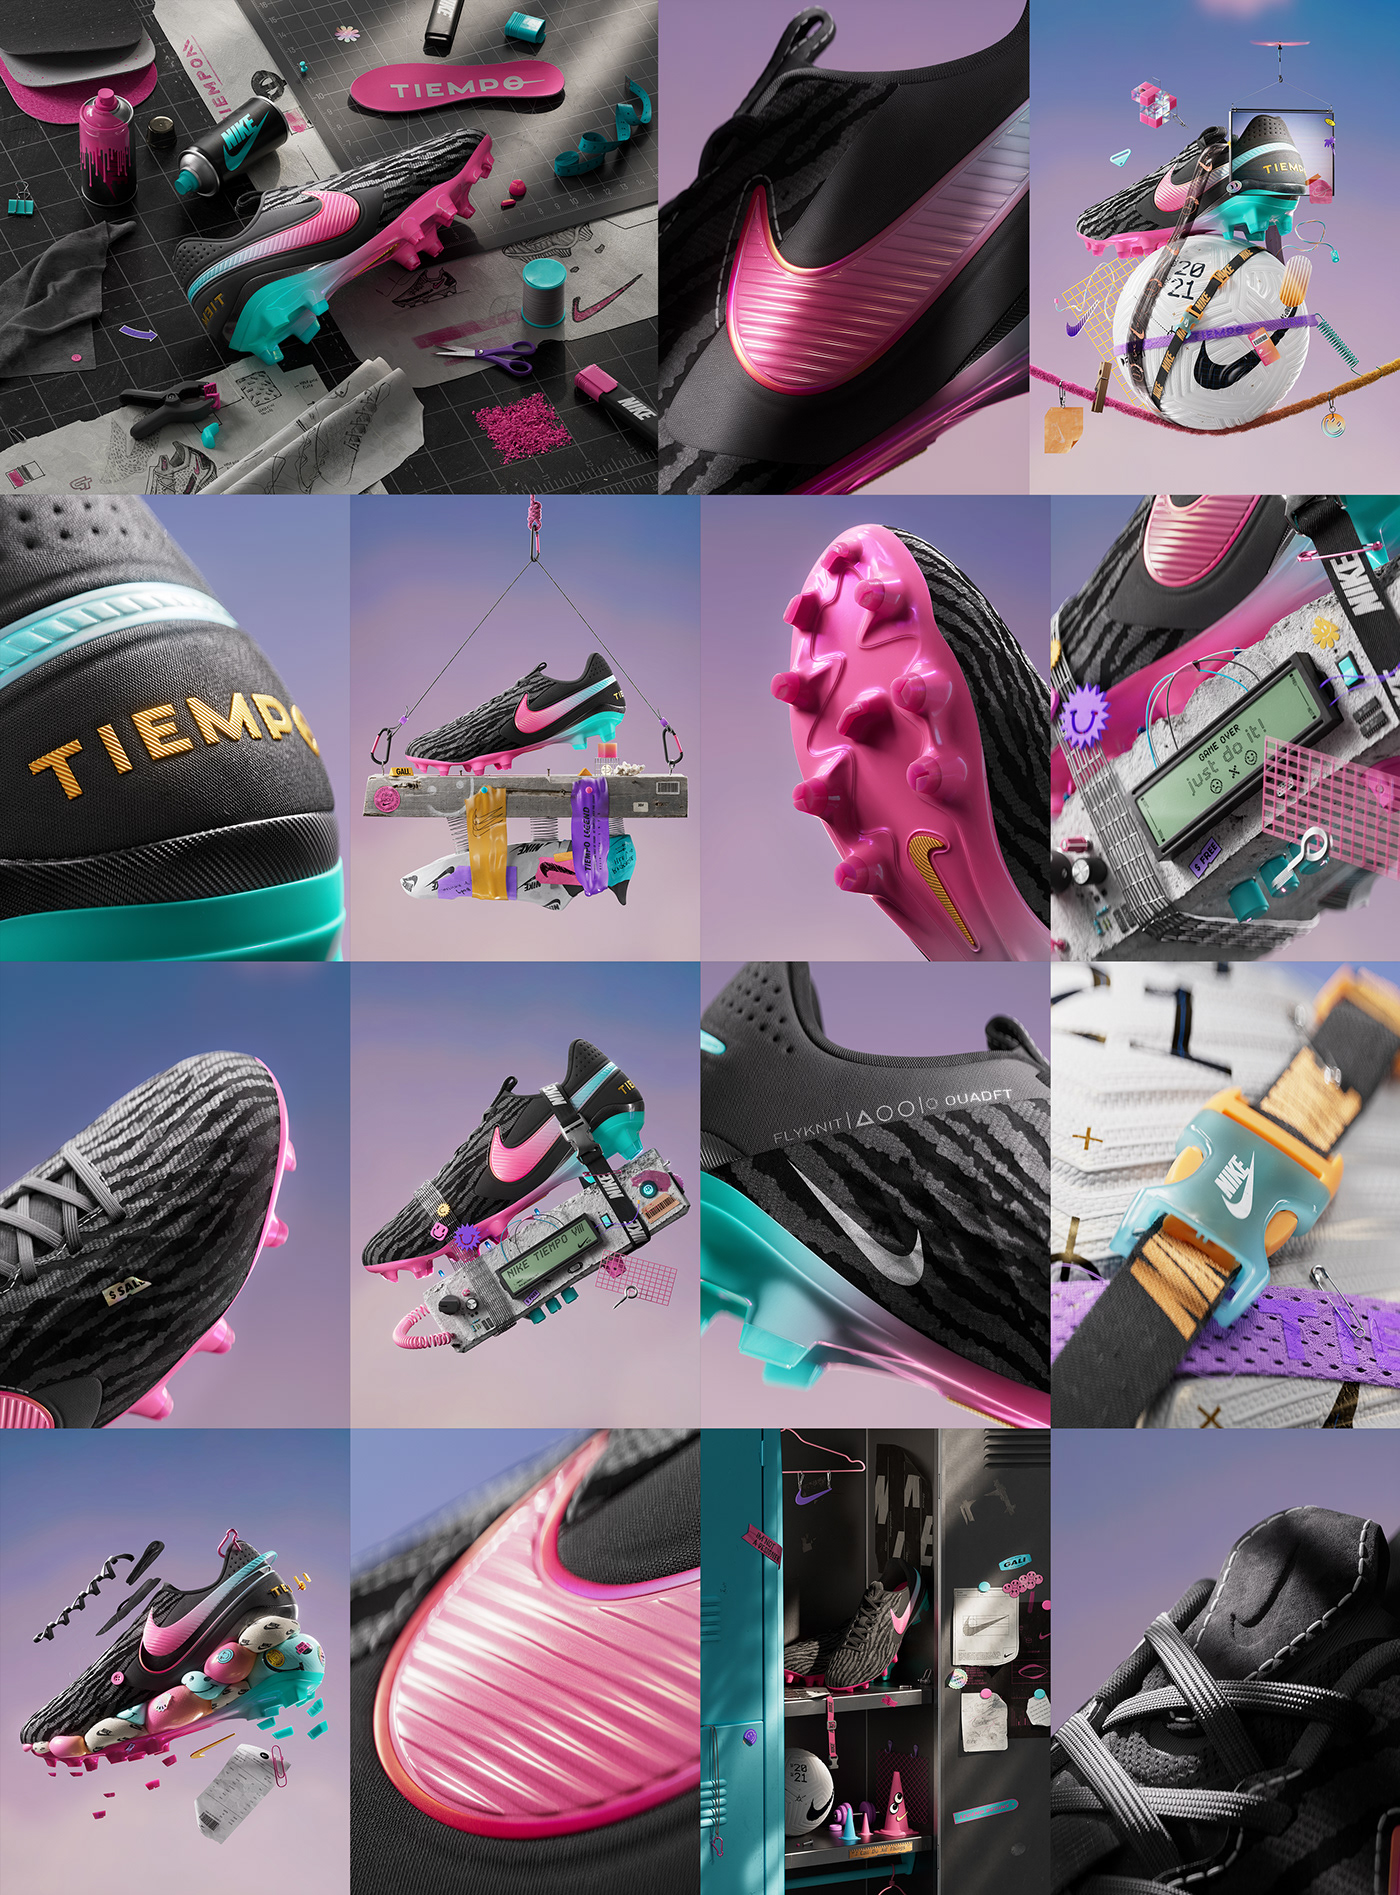 3D c4d cinema4d color Digital Art  Nike octane Render Product Rendering sneakers